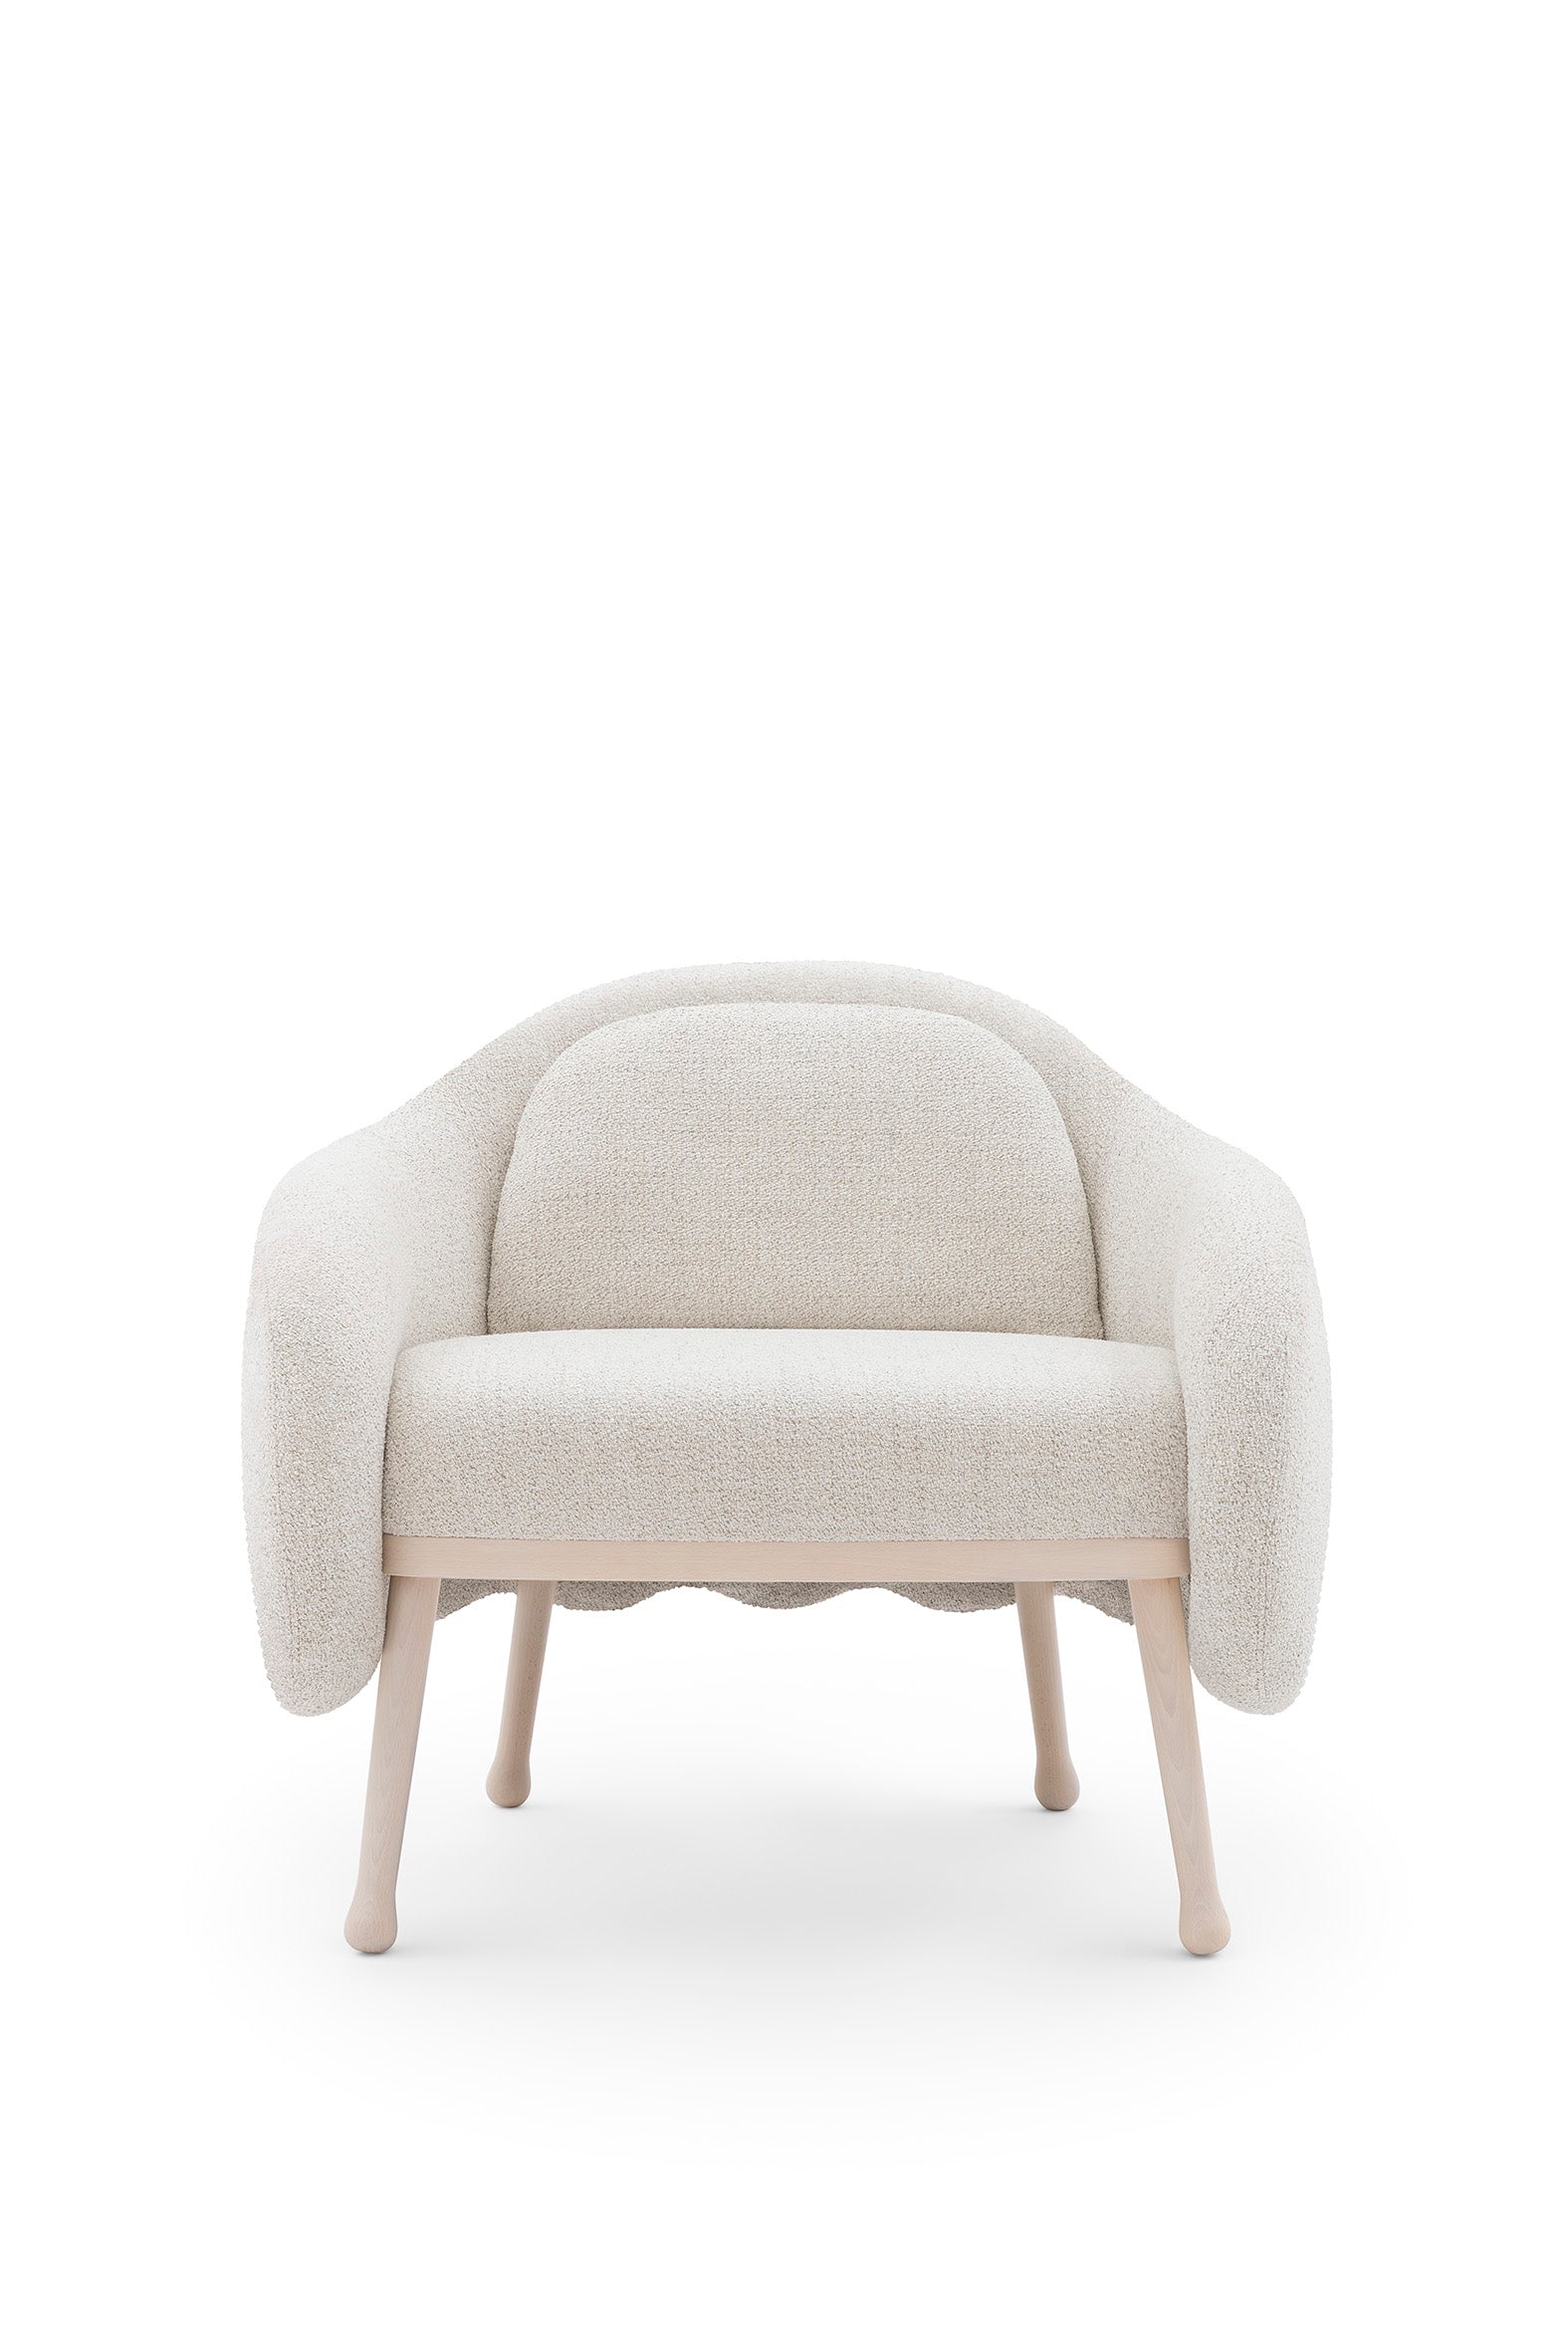 Corolla 271 Lounge Chair-Billiani-Contract Furniture Store